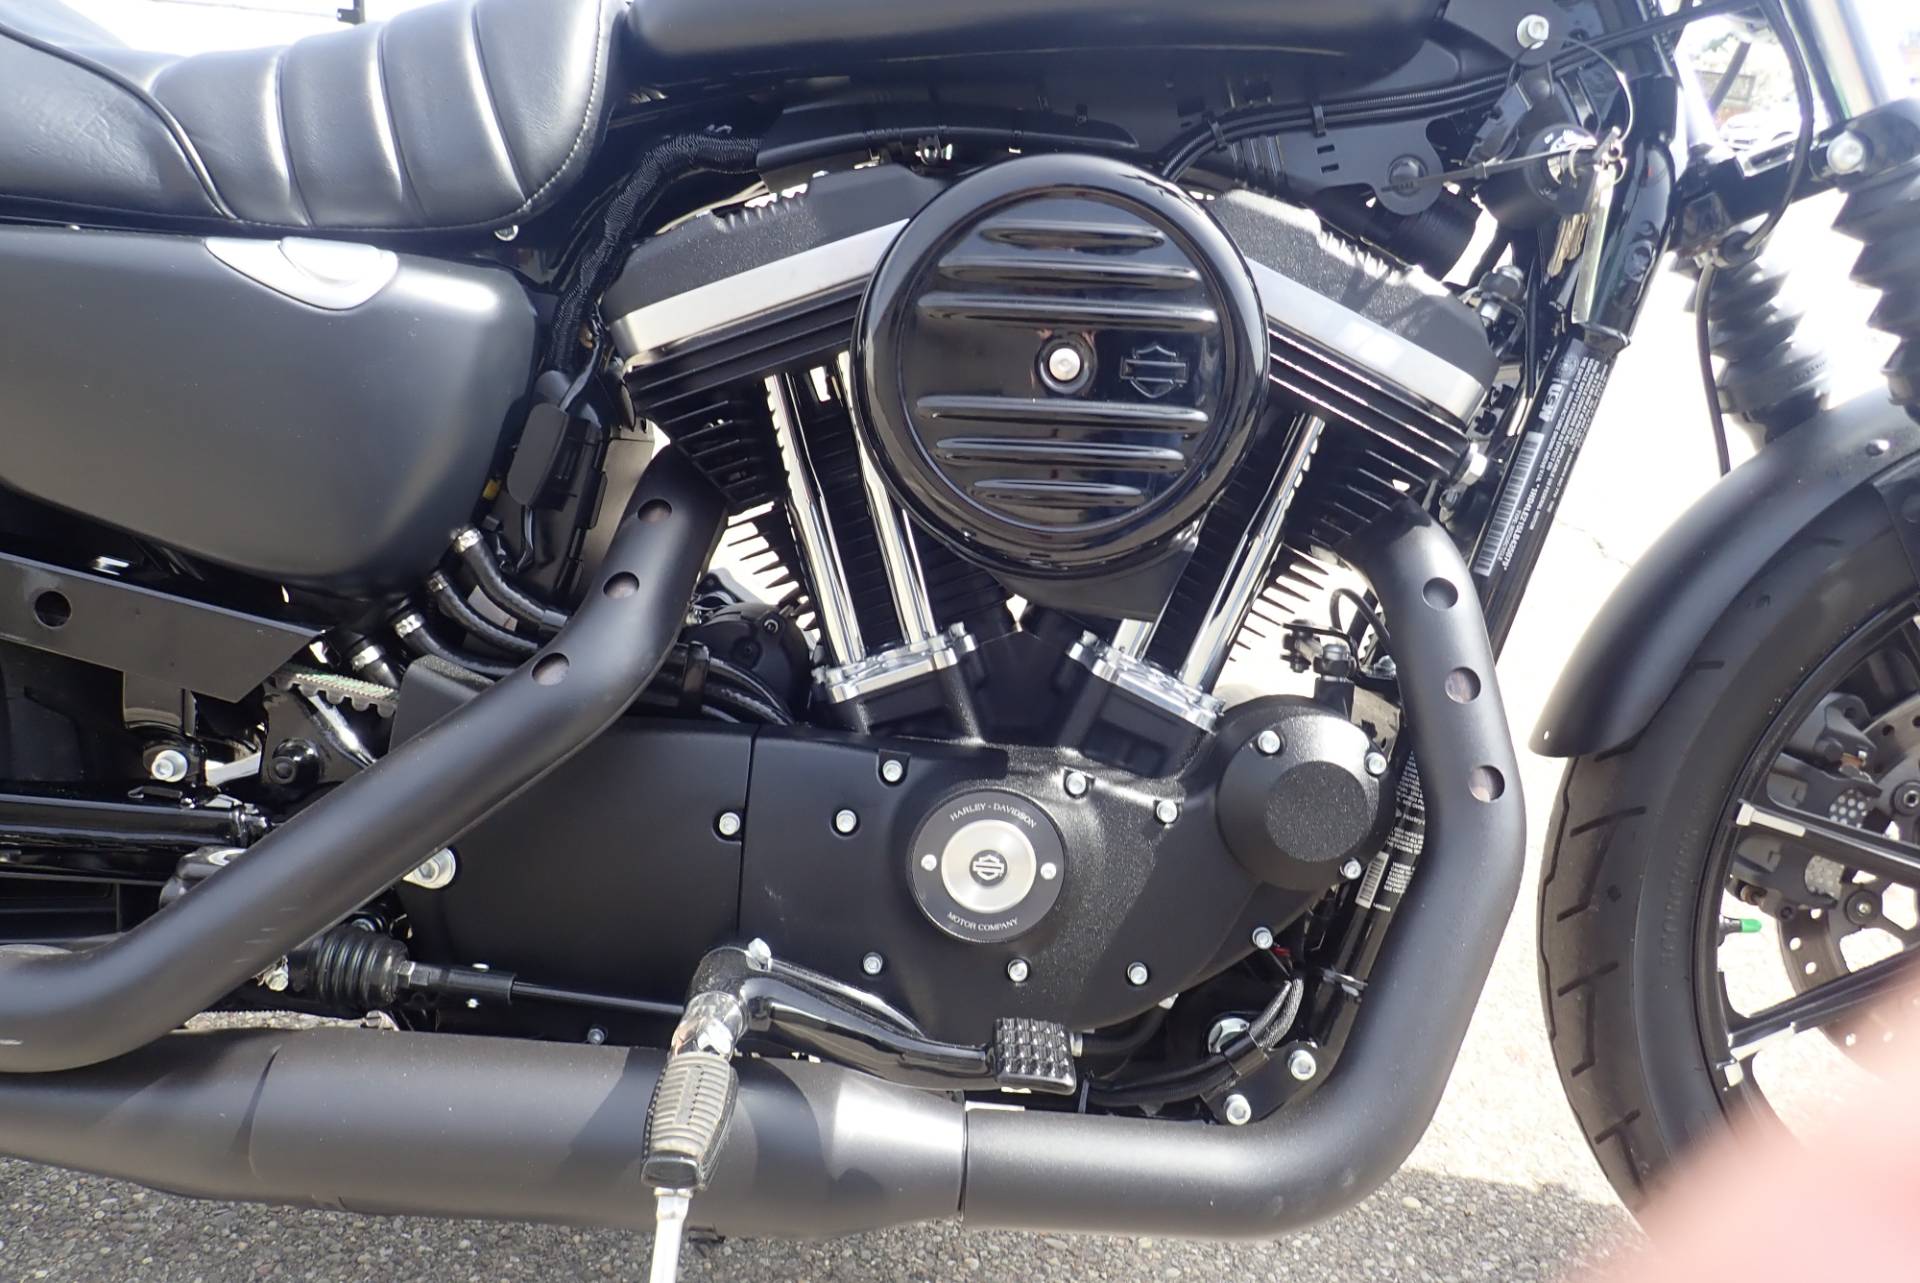 2020 Harley-Davidson Iron 883™ in Massillon, Ohio - Photo 4